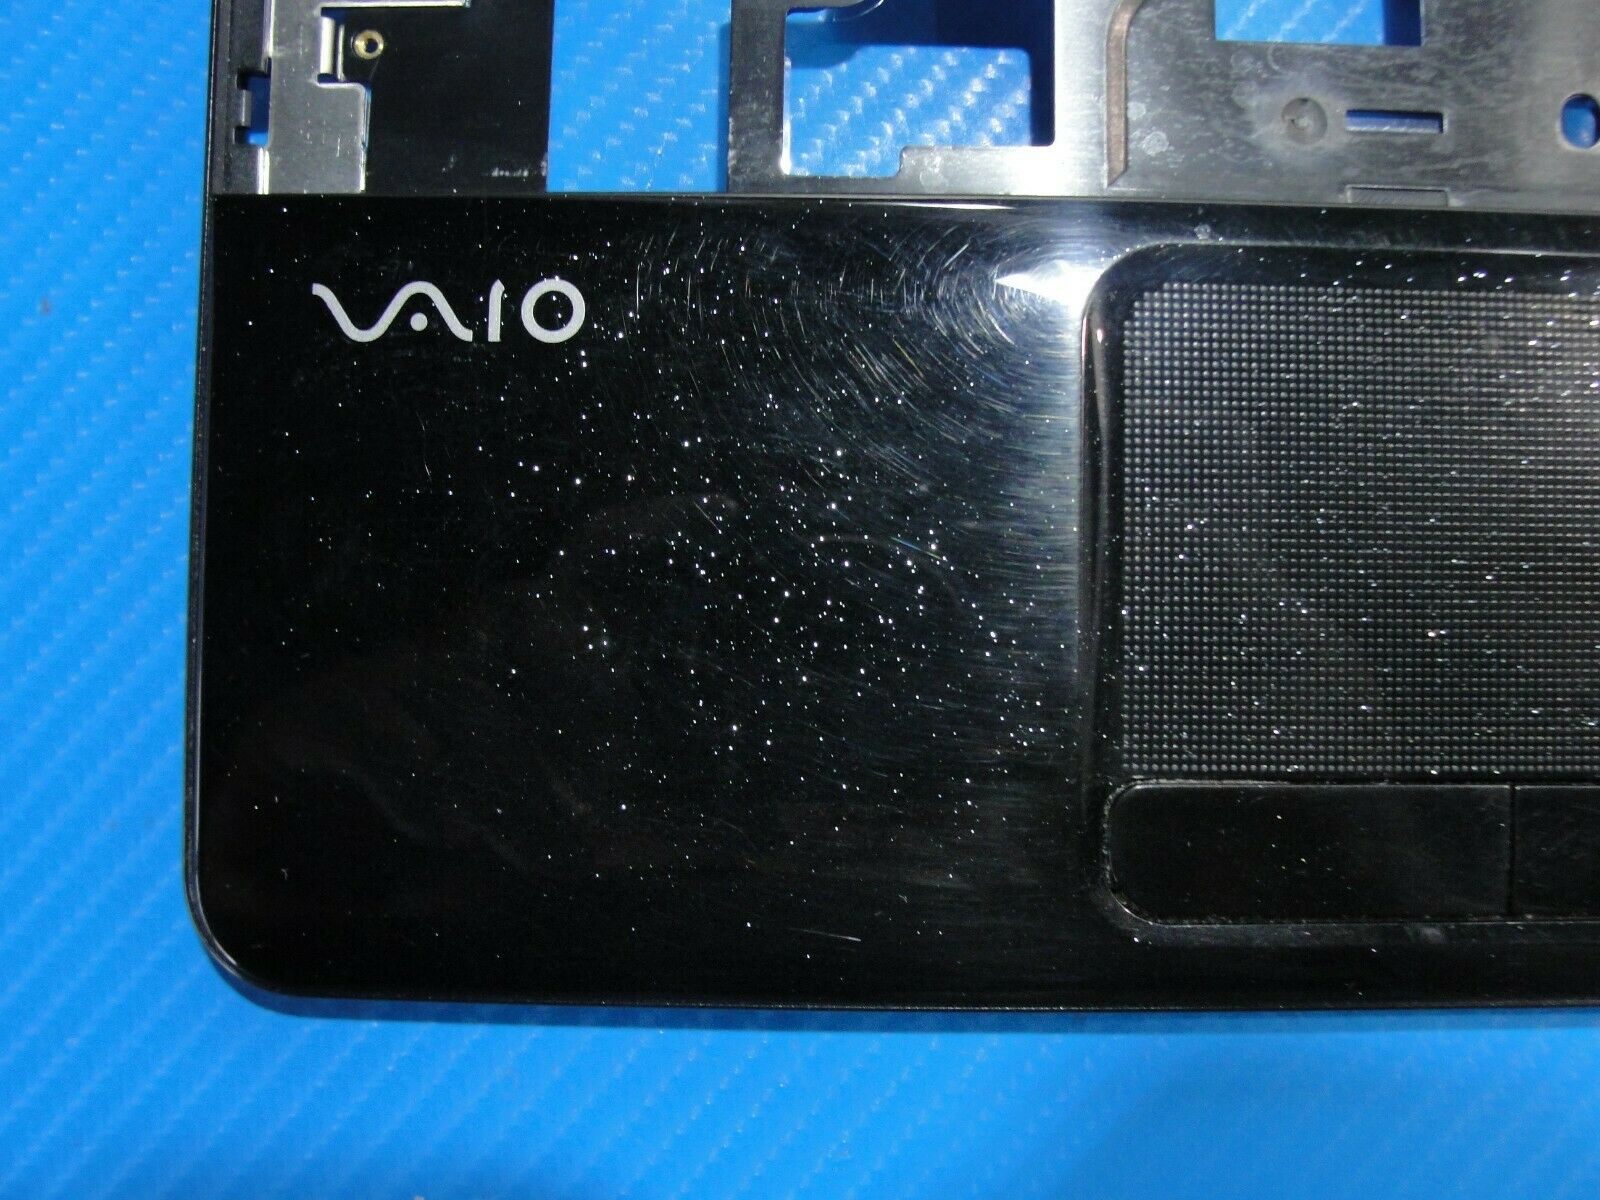 Sony Vaio PCG-61611L VPCEE25FX 15.5